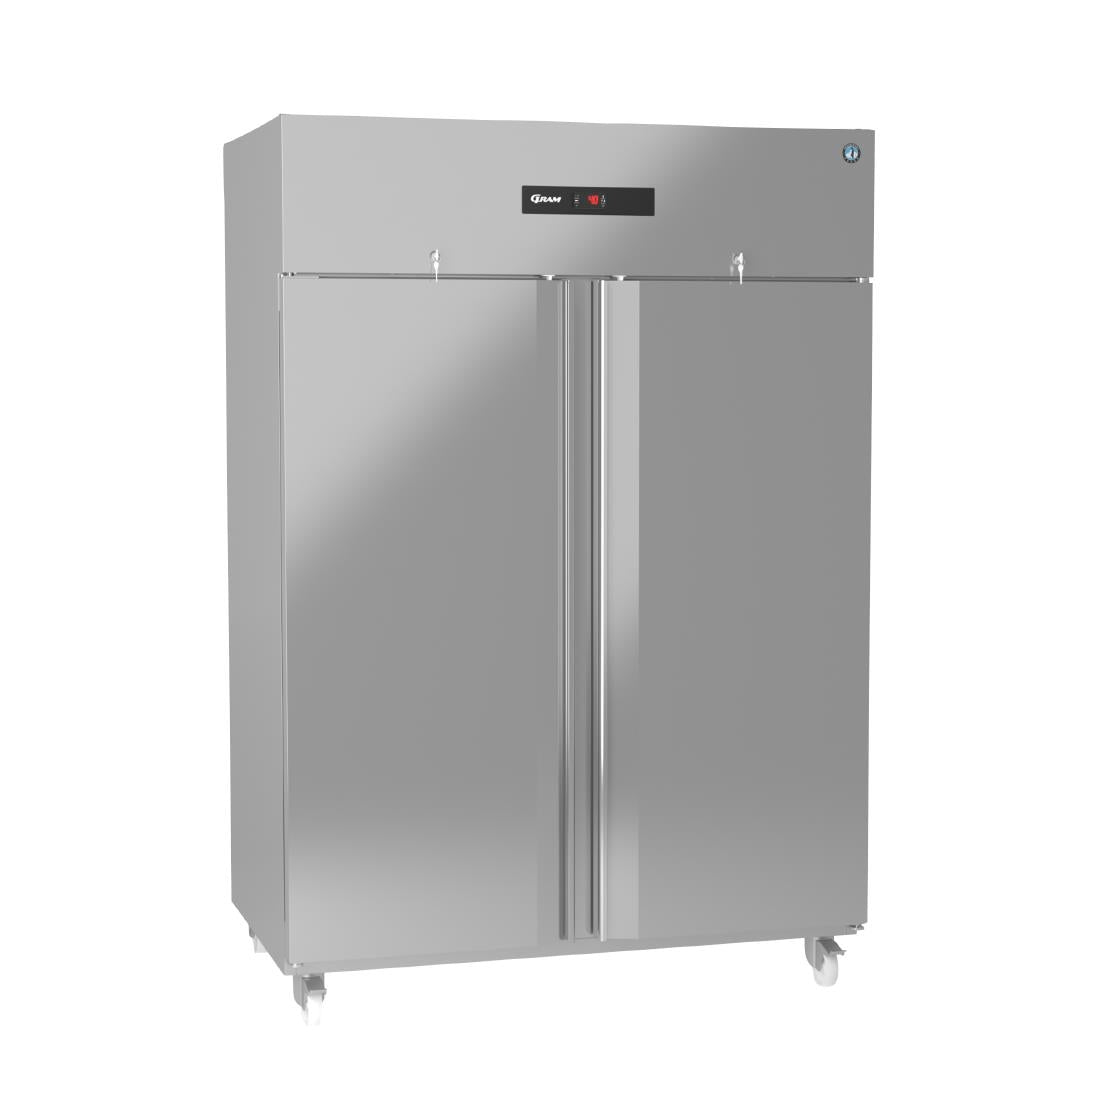 CU266 Hoshizaki Advance Double Door Refrigerator K140-4 C U JD Catering Equipment Solutions Ltd